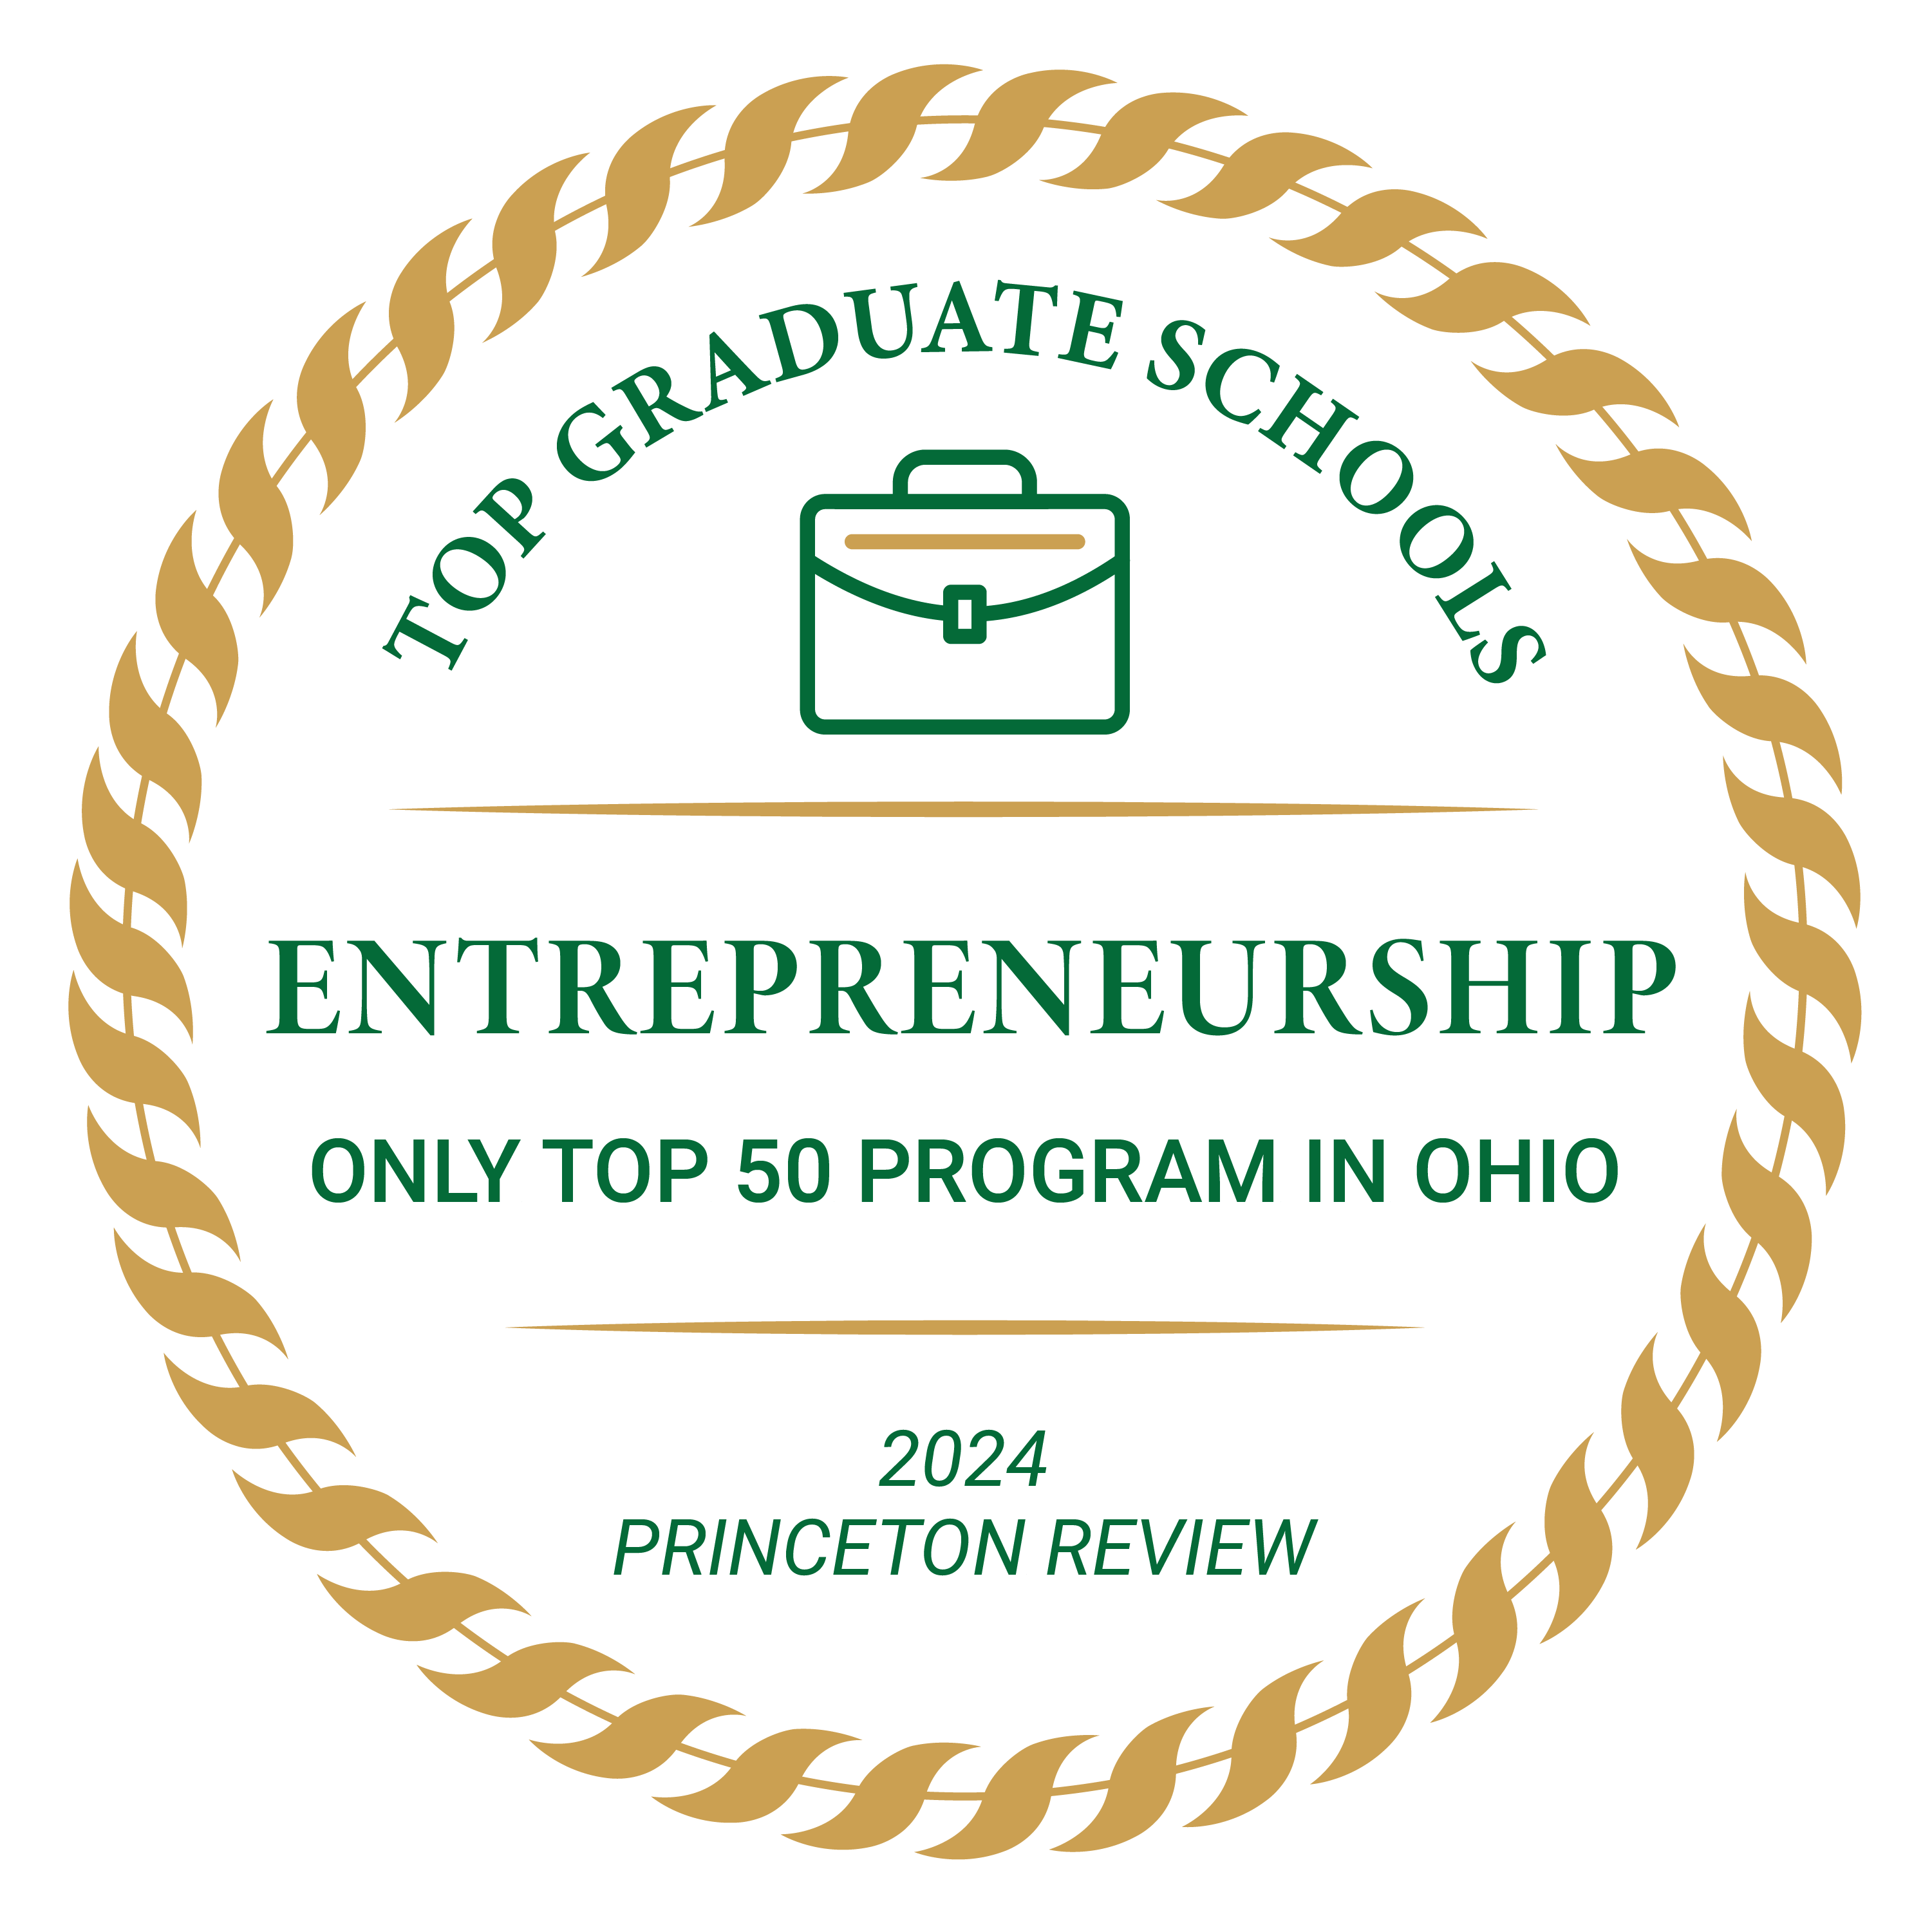 2020 Princeton Review Master's of Business Administration Entrepreneurship